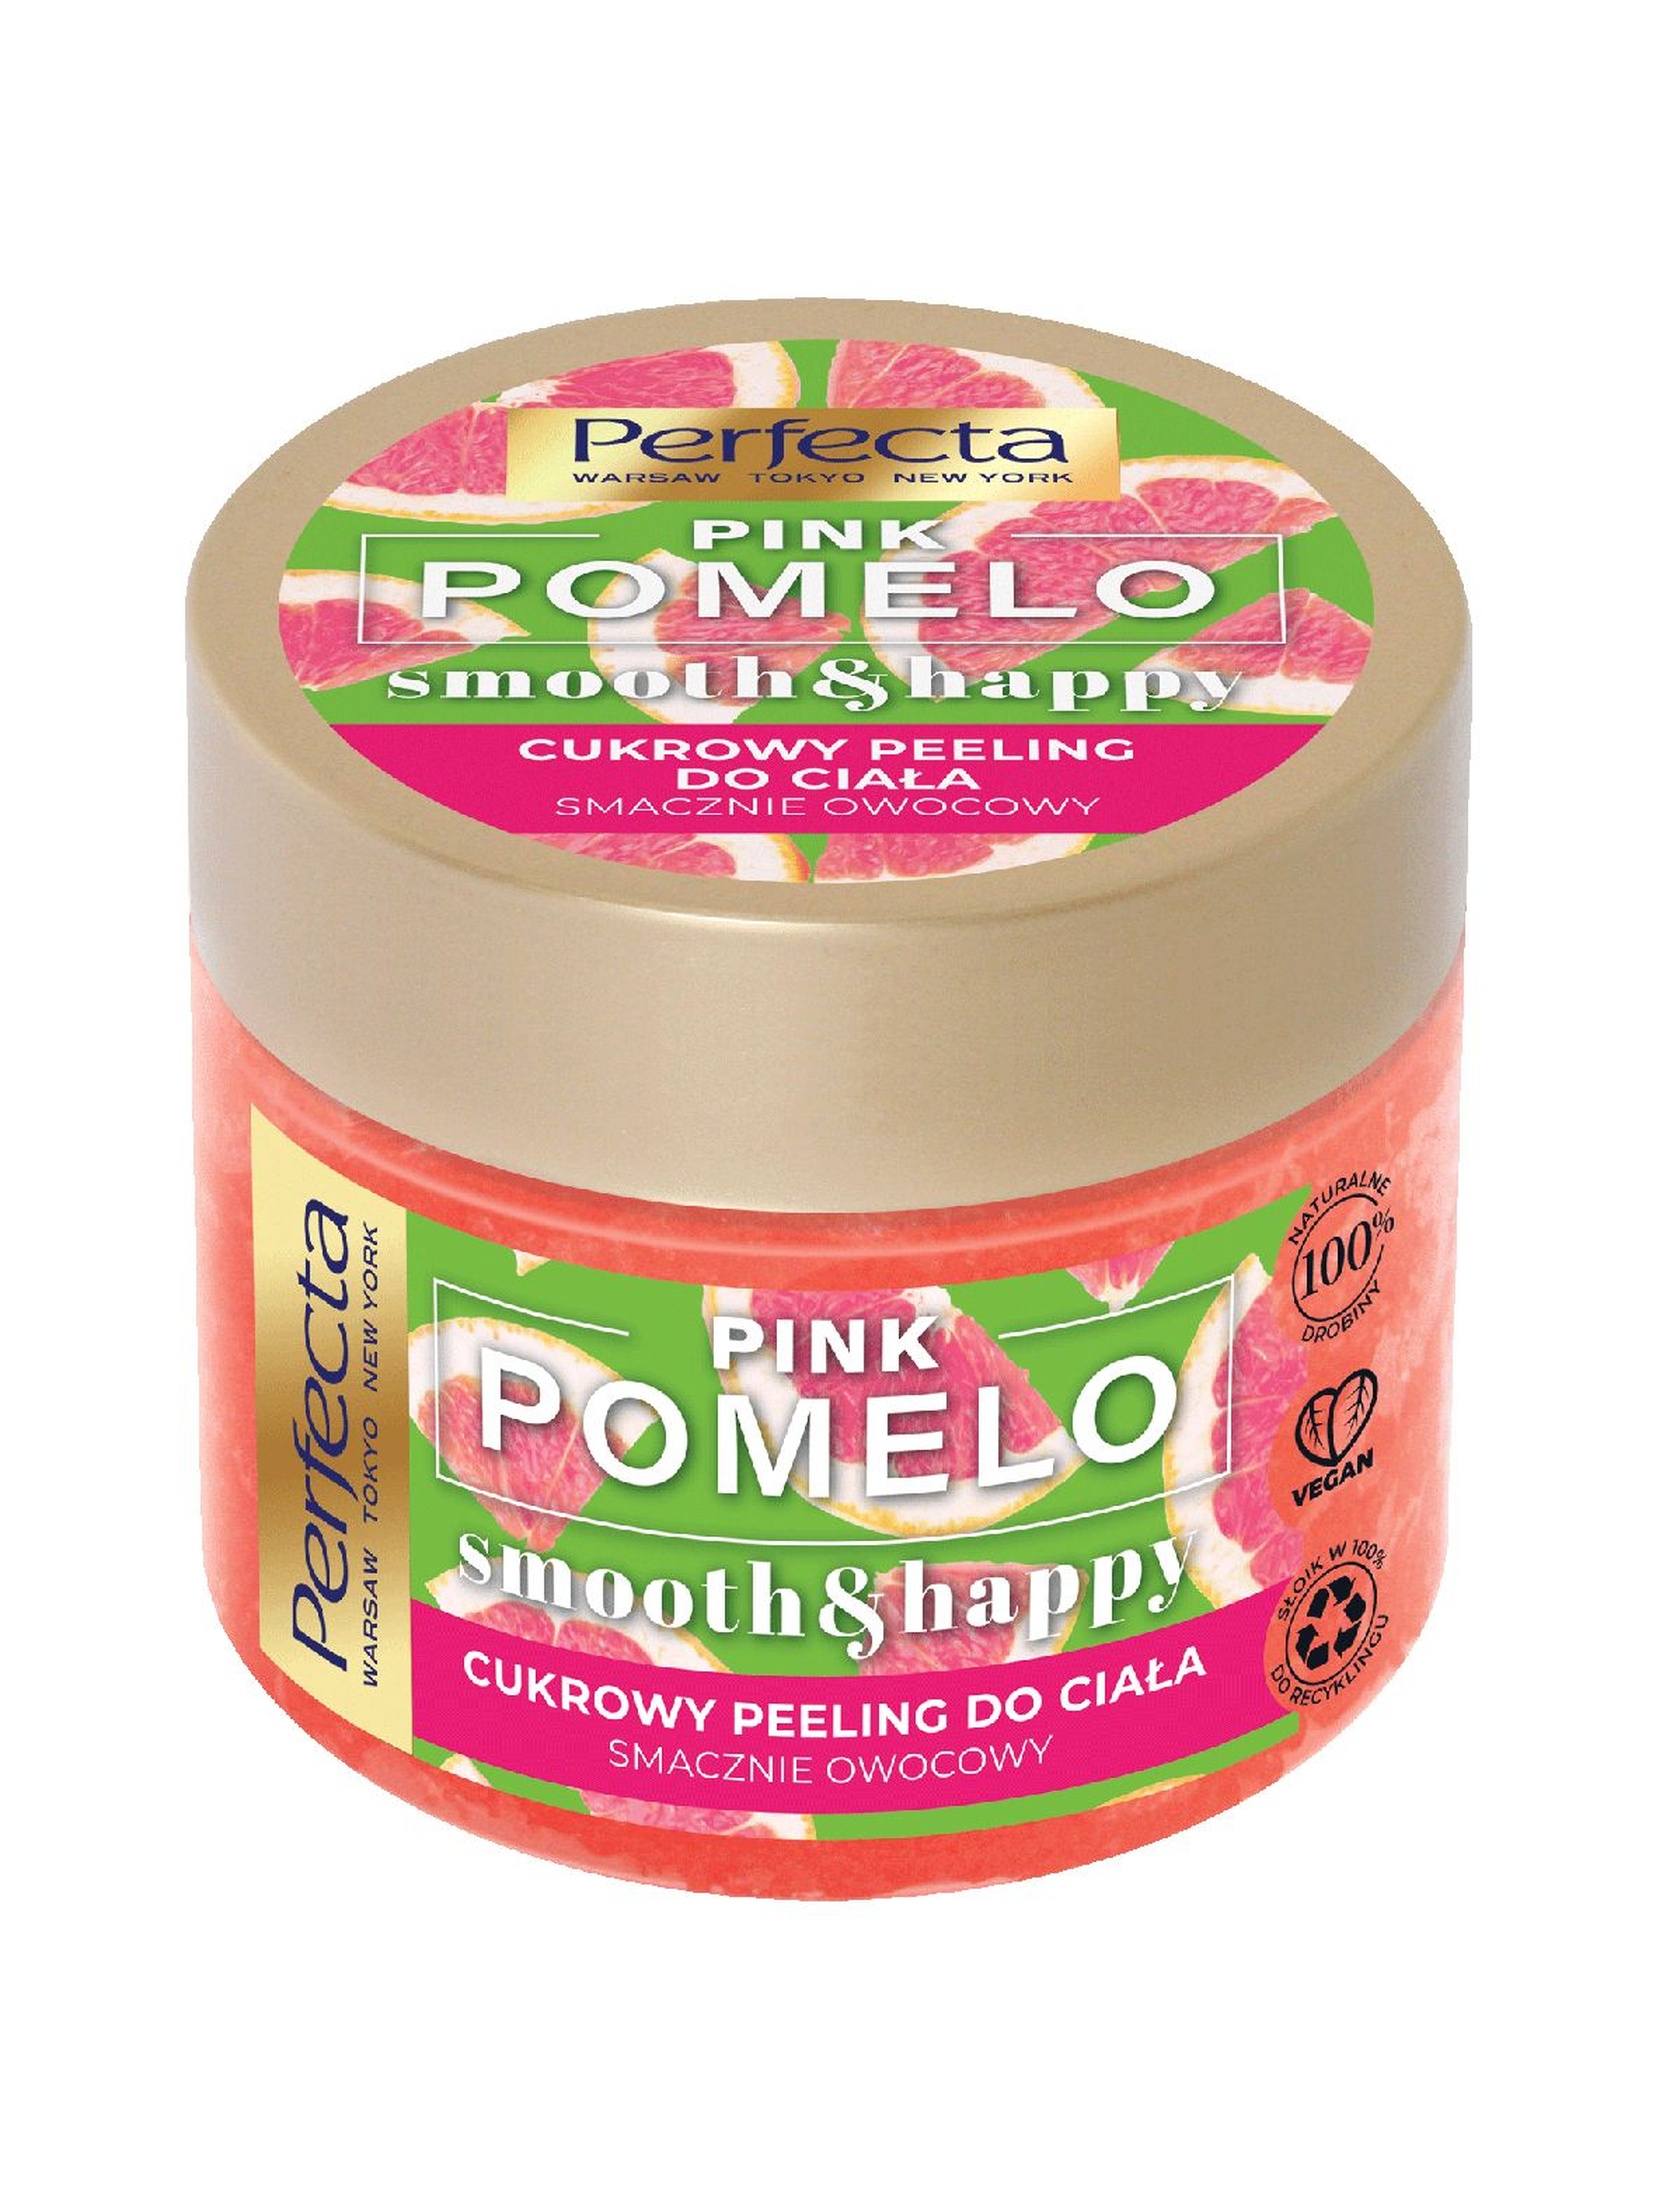 Perfecta cukrowy peeling do ciała Pink Pomelo - 300 g